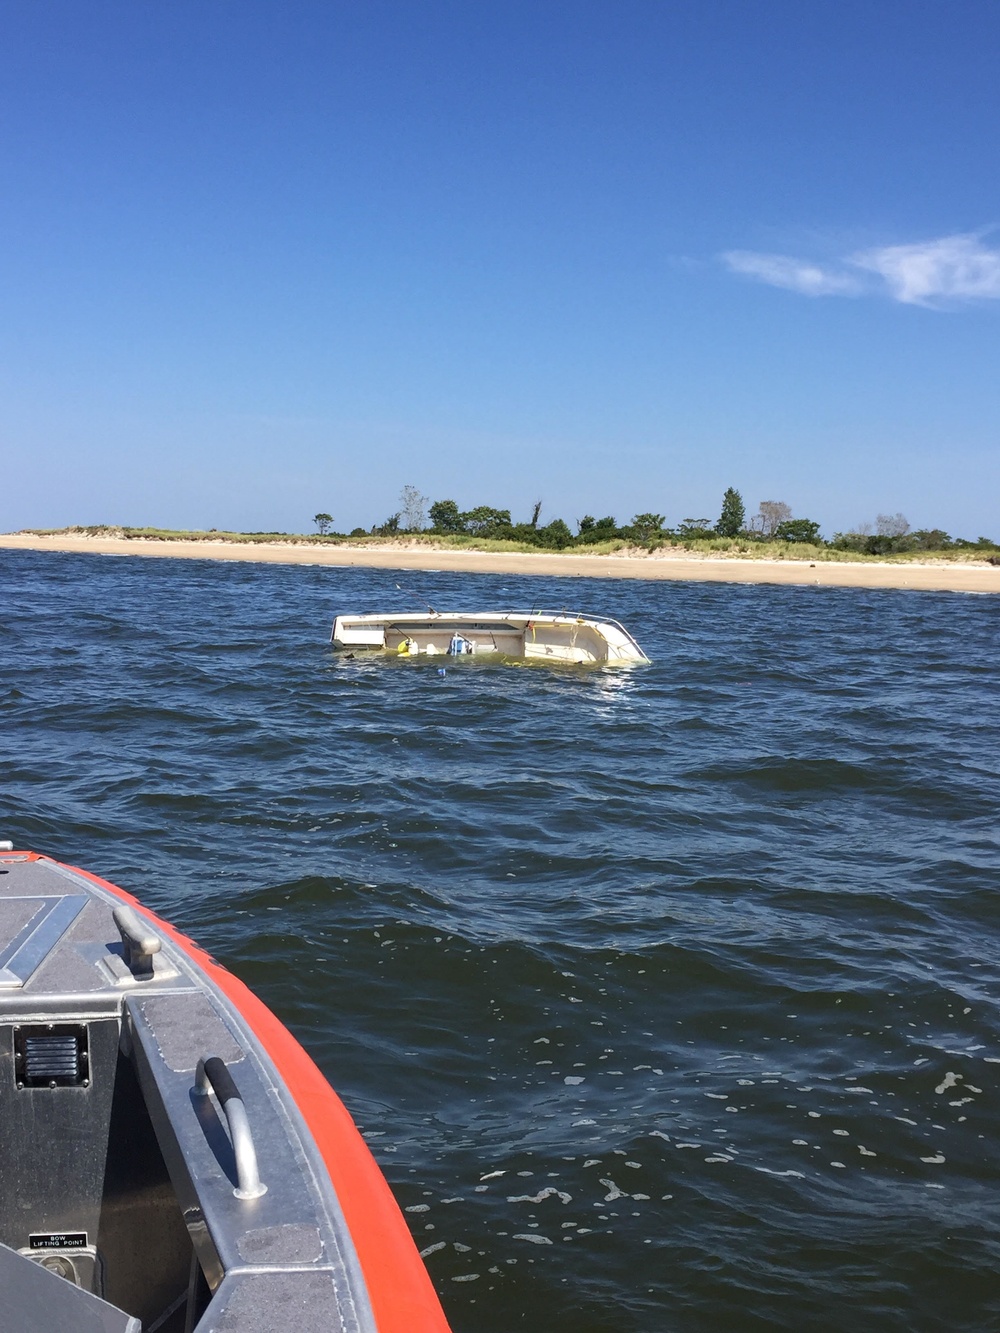 Coast Guard, good Samaritan rescues 6 people from capsized vessel near Sandy Hook, N.J.